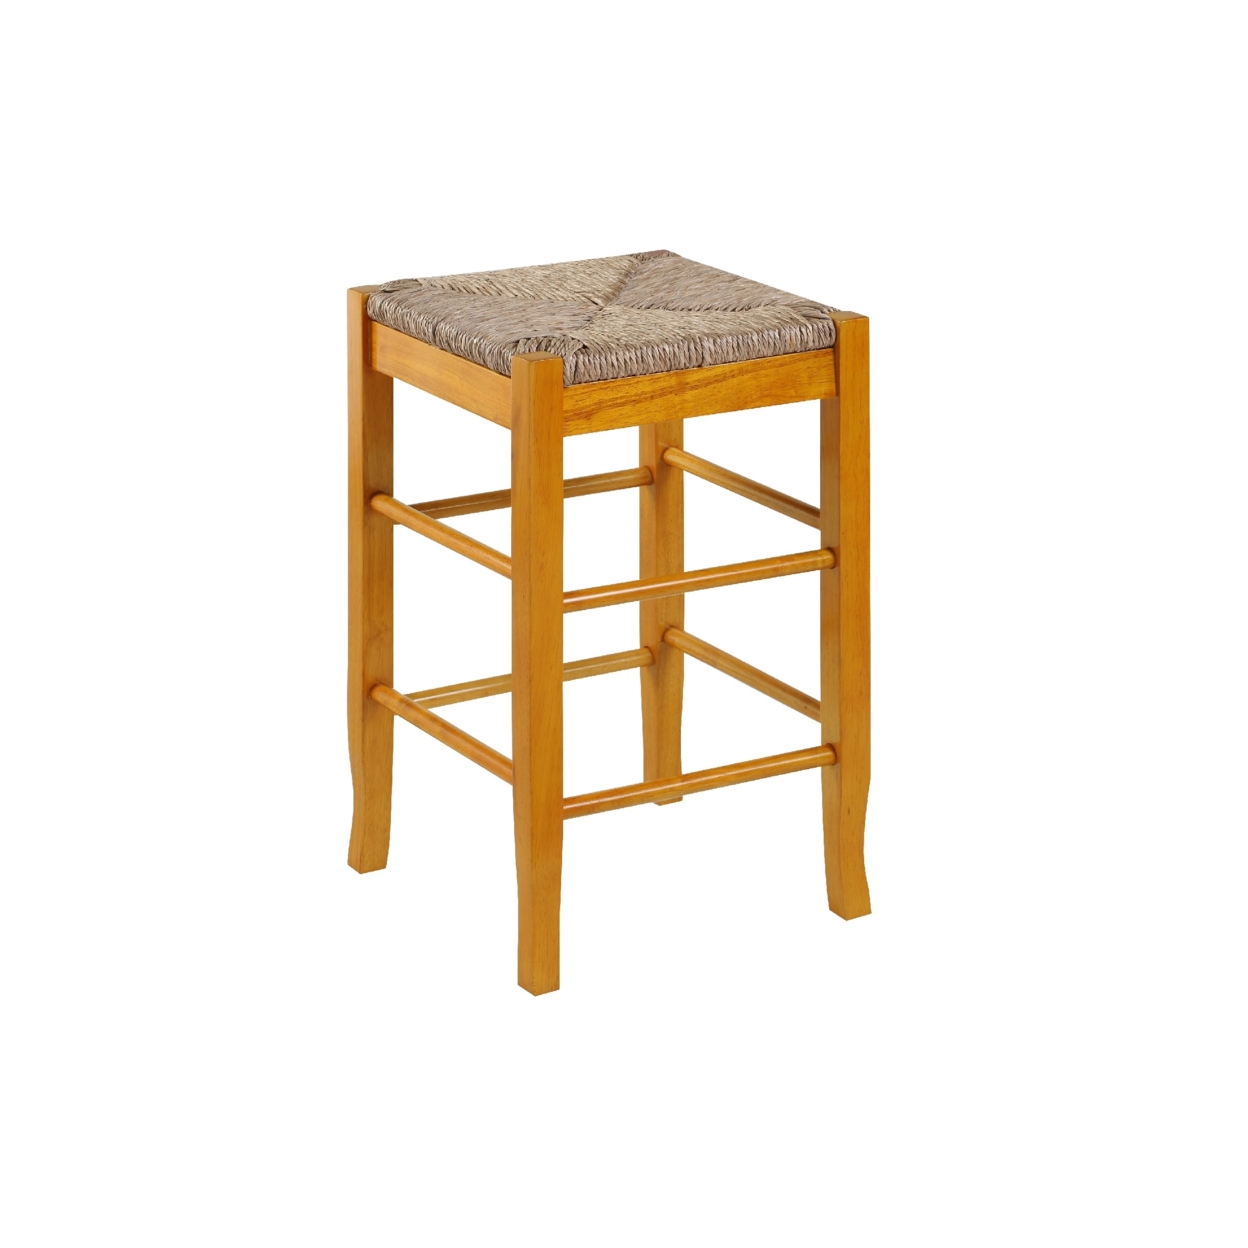 Chris 24 Inch Counter Stool With Wood Frame, Handwoven Rush Seat, Oak Brown- Saltoro Sherpi